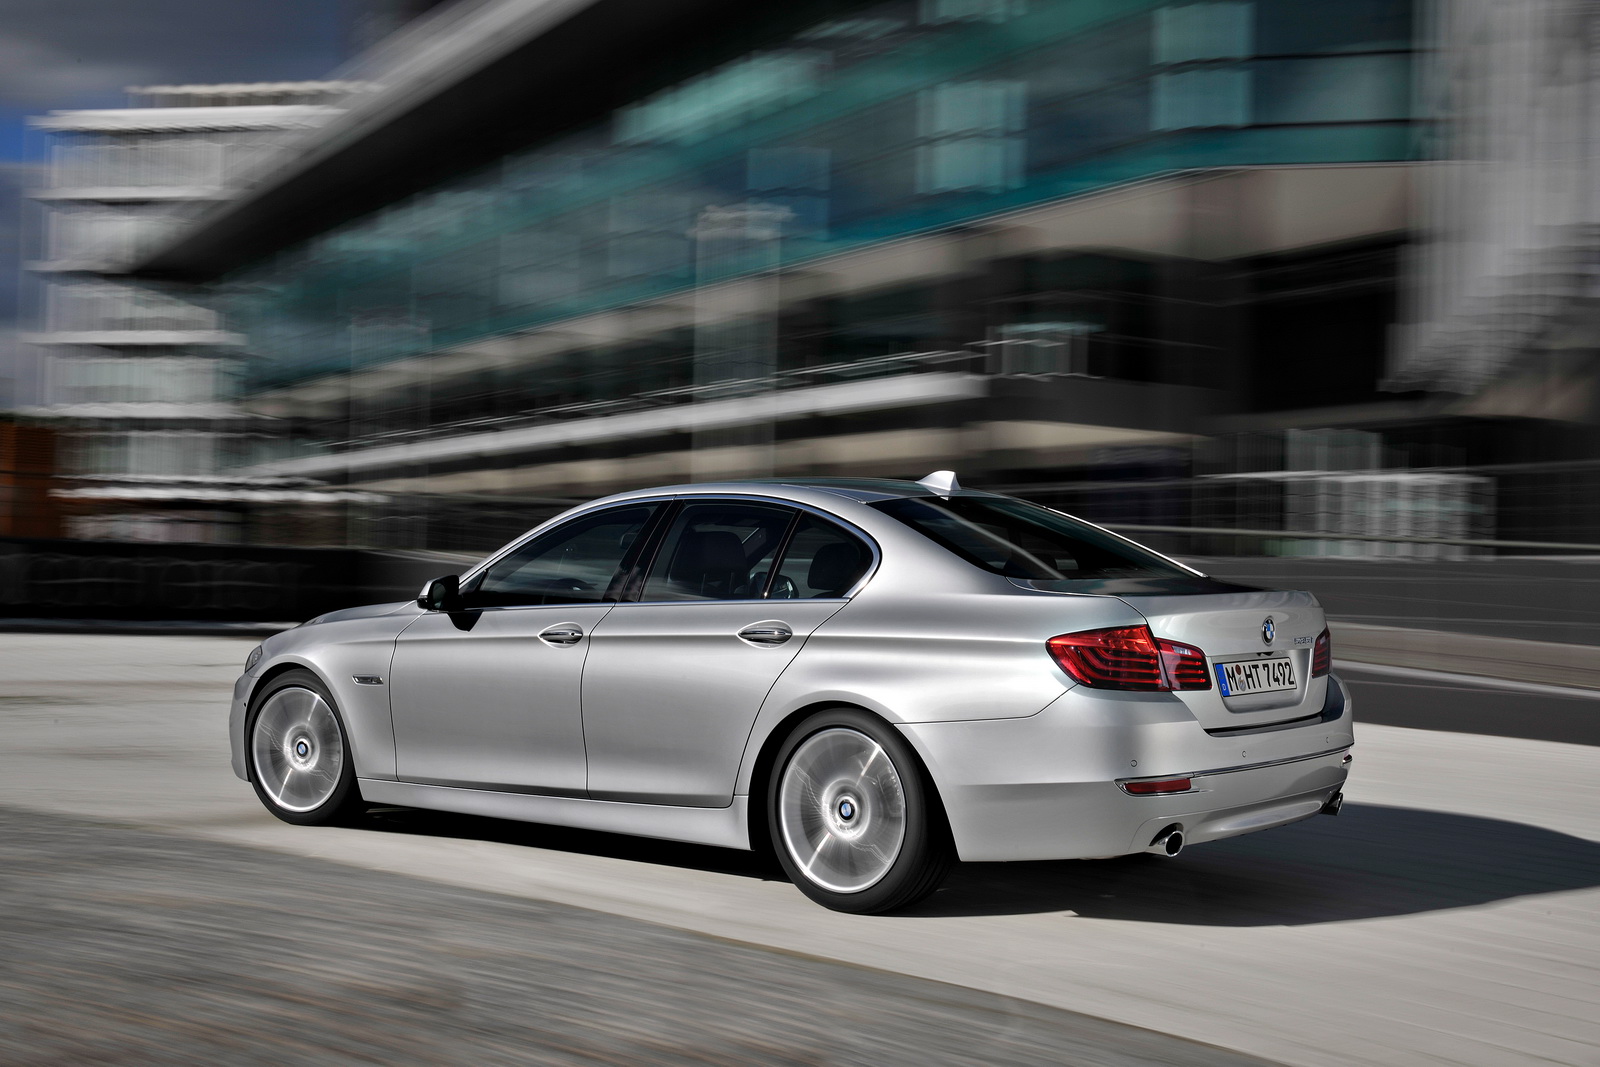 BMW Celebrates 2 Million F10 5-Series Models Sold Since 2010